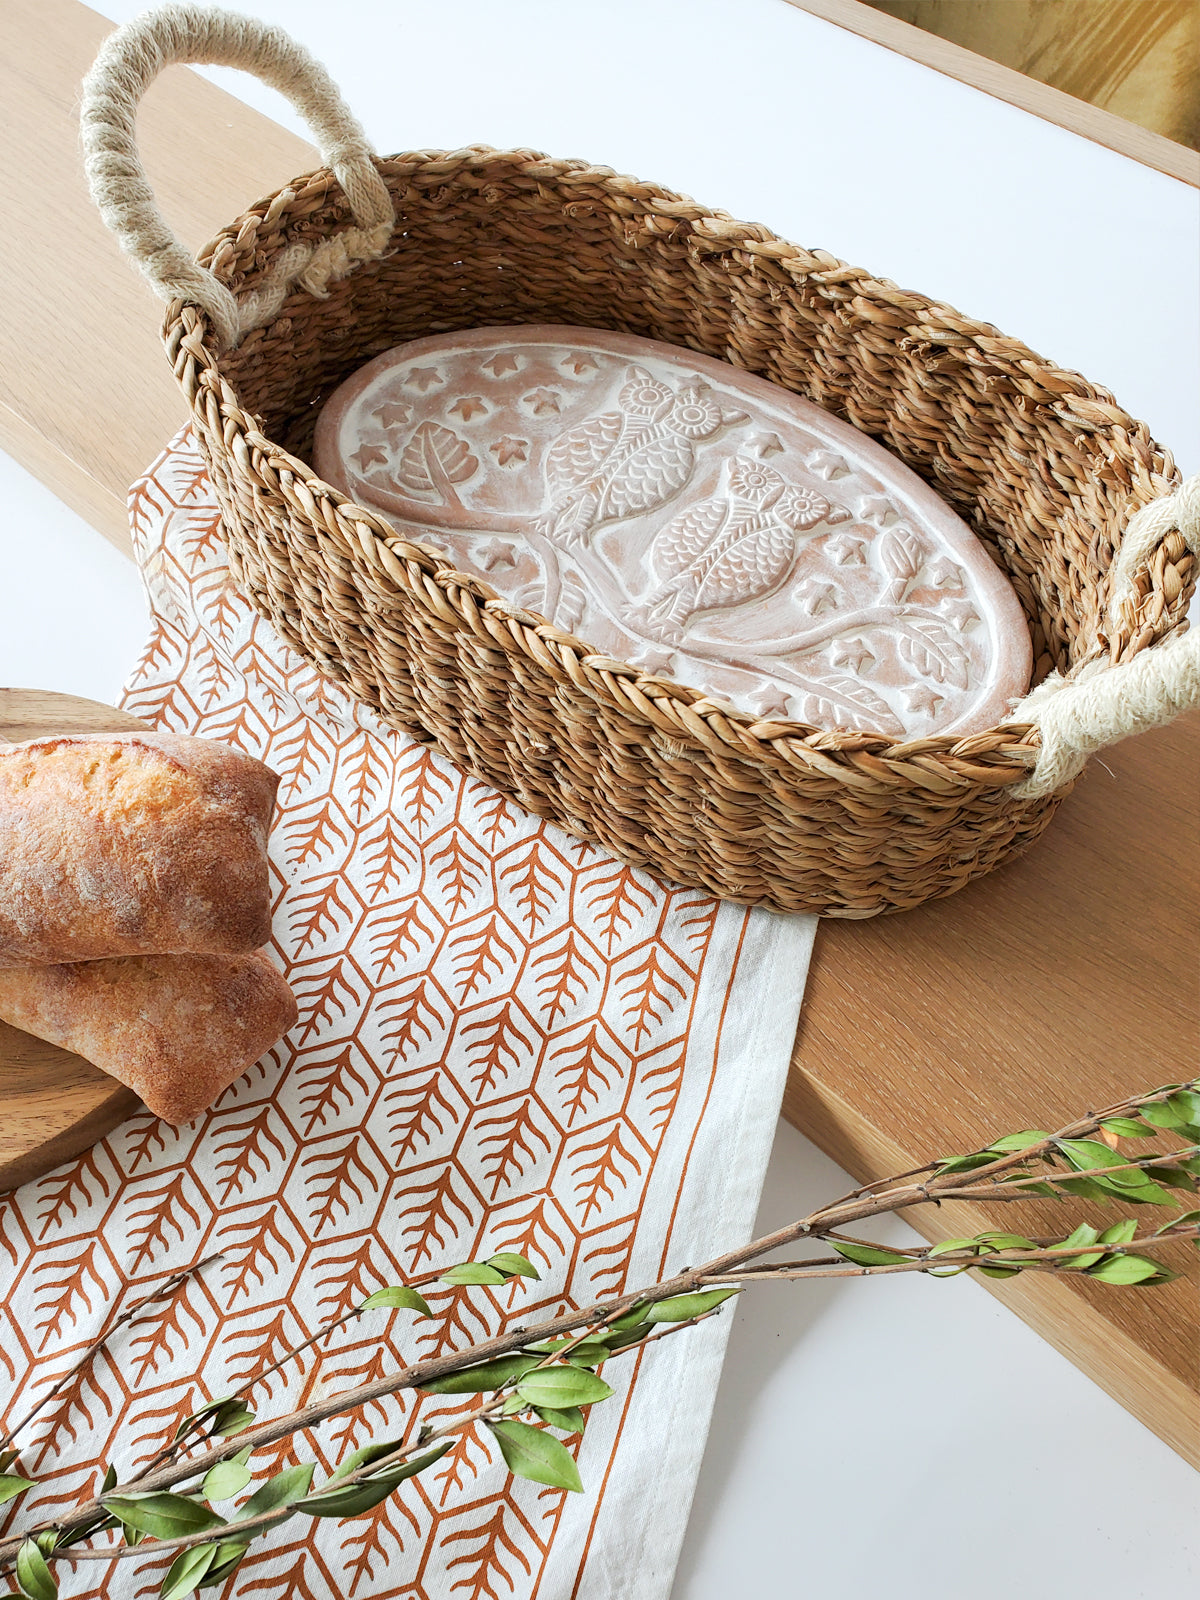 
                  
                    Bread Warmer & Basket Gift Set with Tea Towel - Owl Oval by KORISSA
                  
                